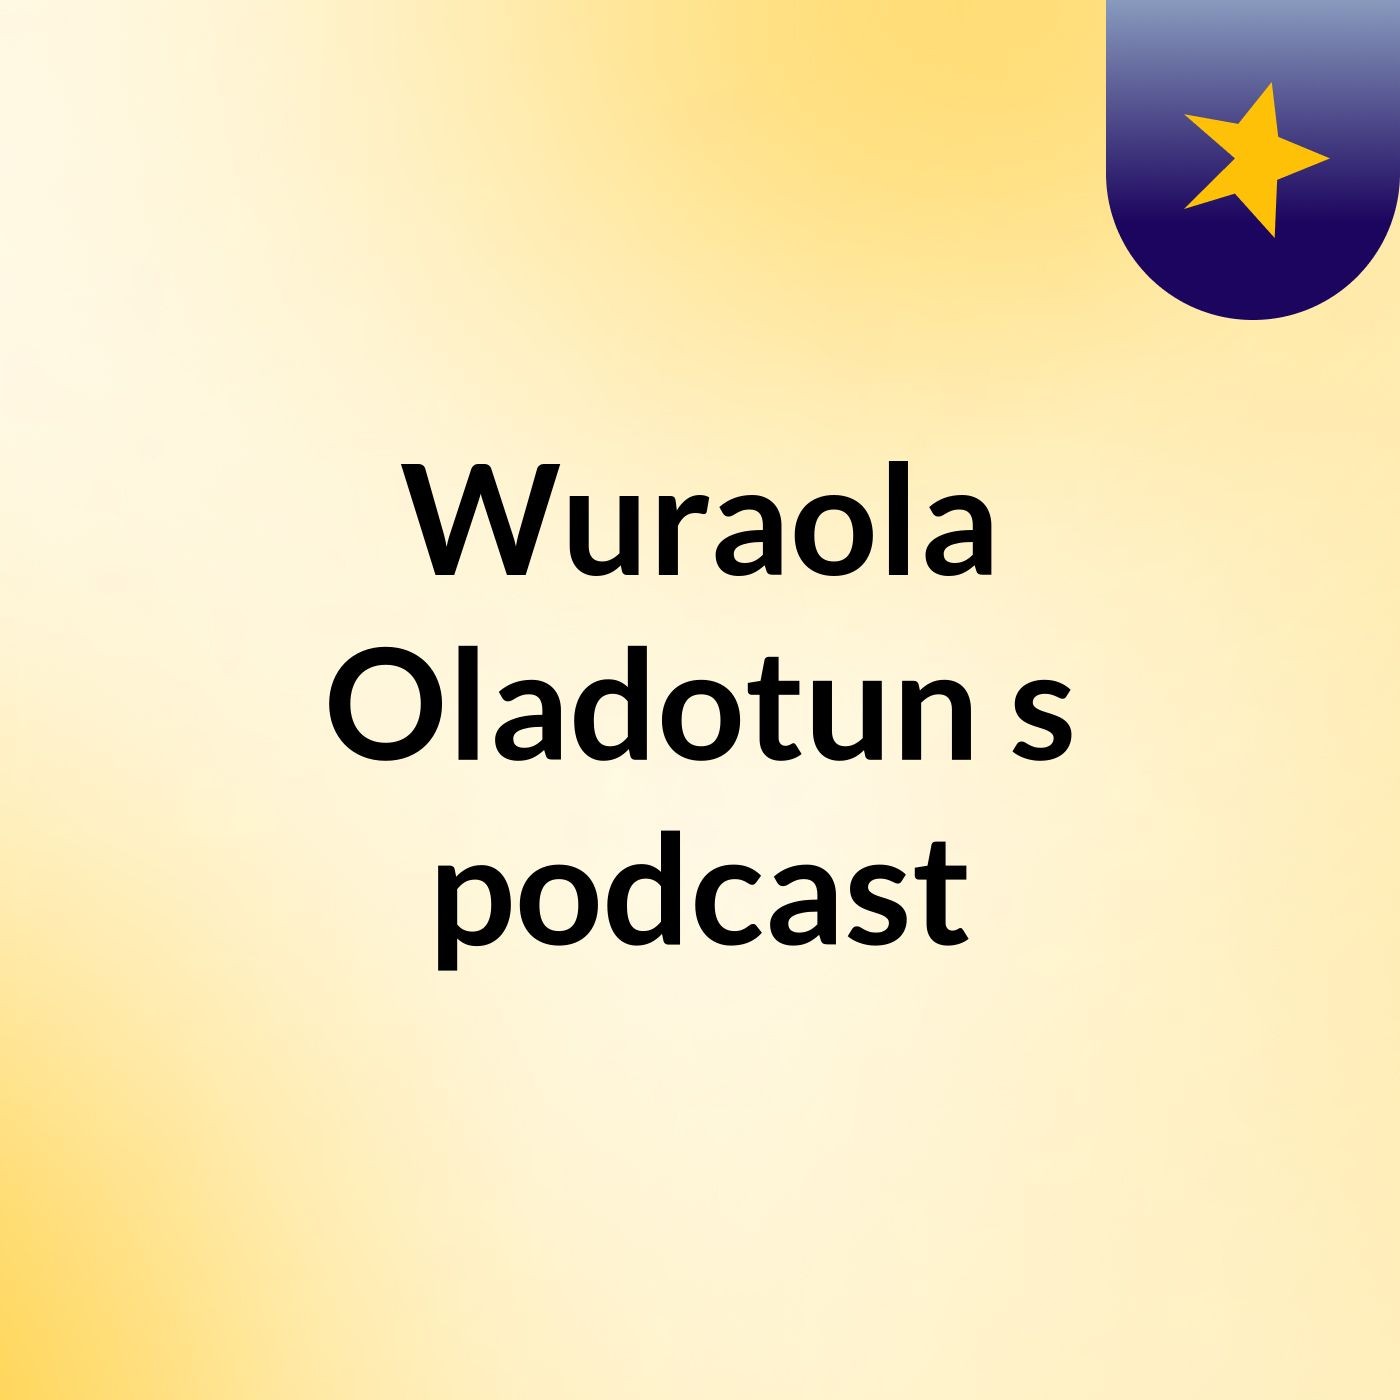 Wuraola Oladotun's podcast